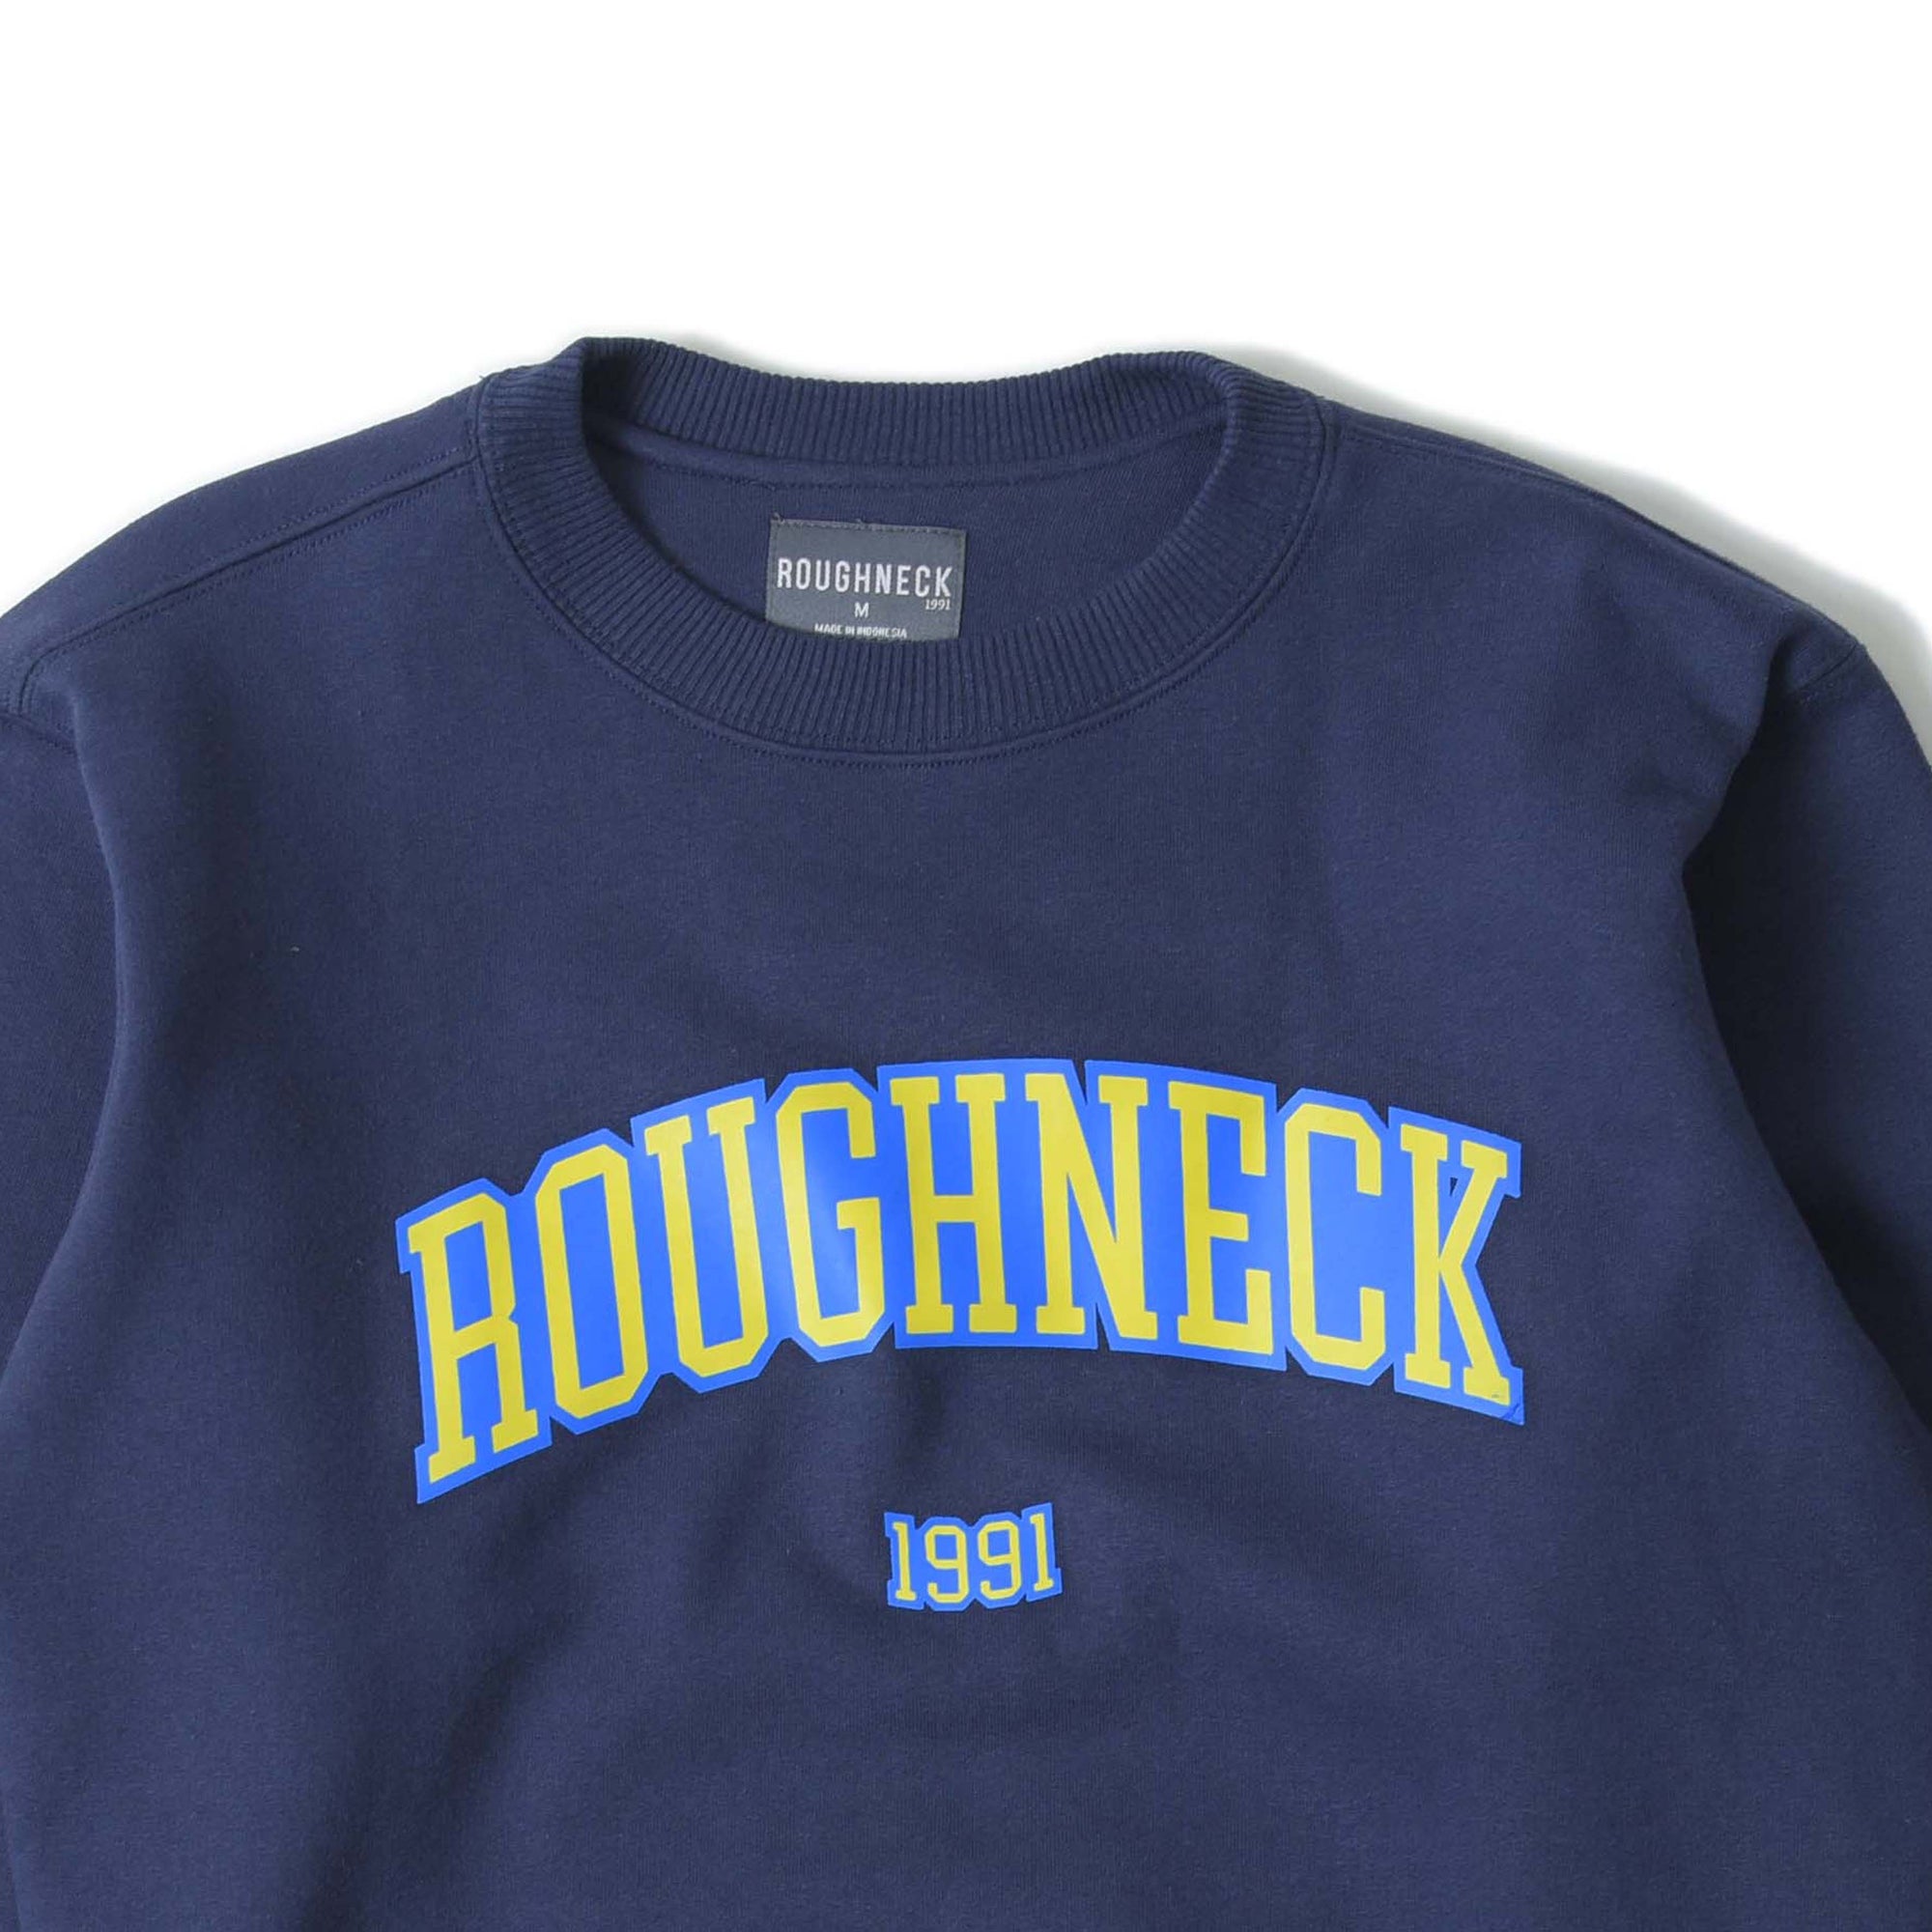 SS011 Navy Authentic Sweatshirt